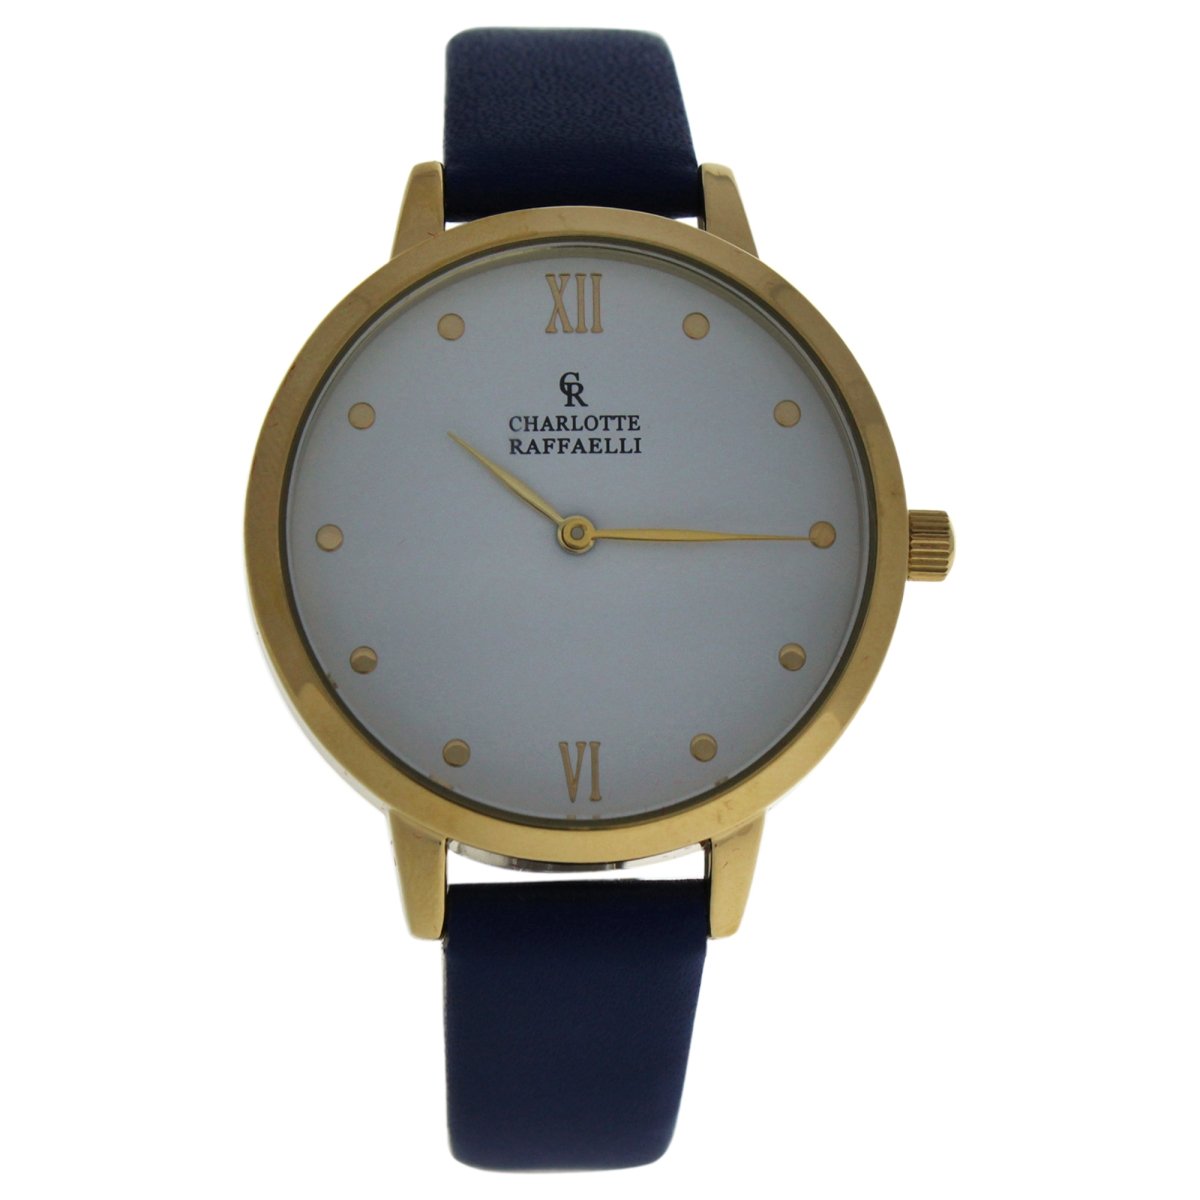 W-wat-1510 La Basic - Gold & Blue Leather Strap Watch For Women - Crb008